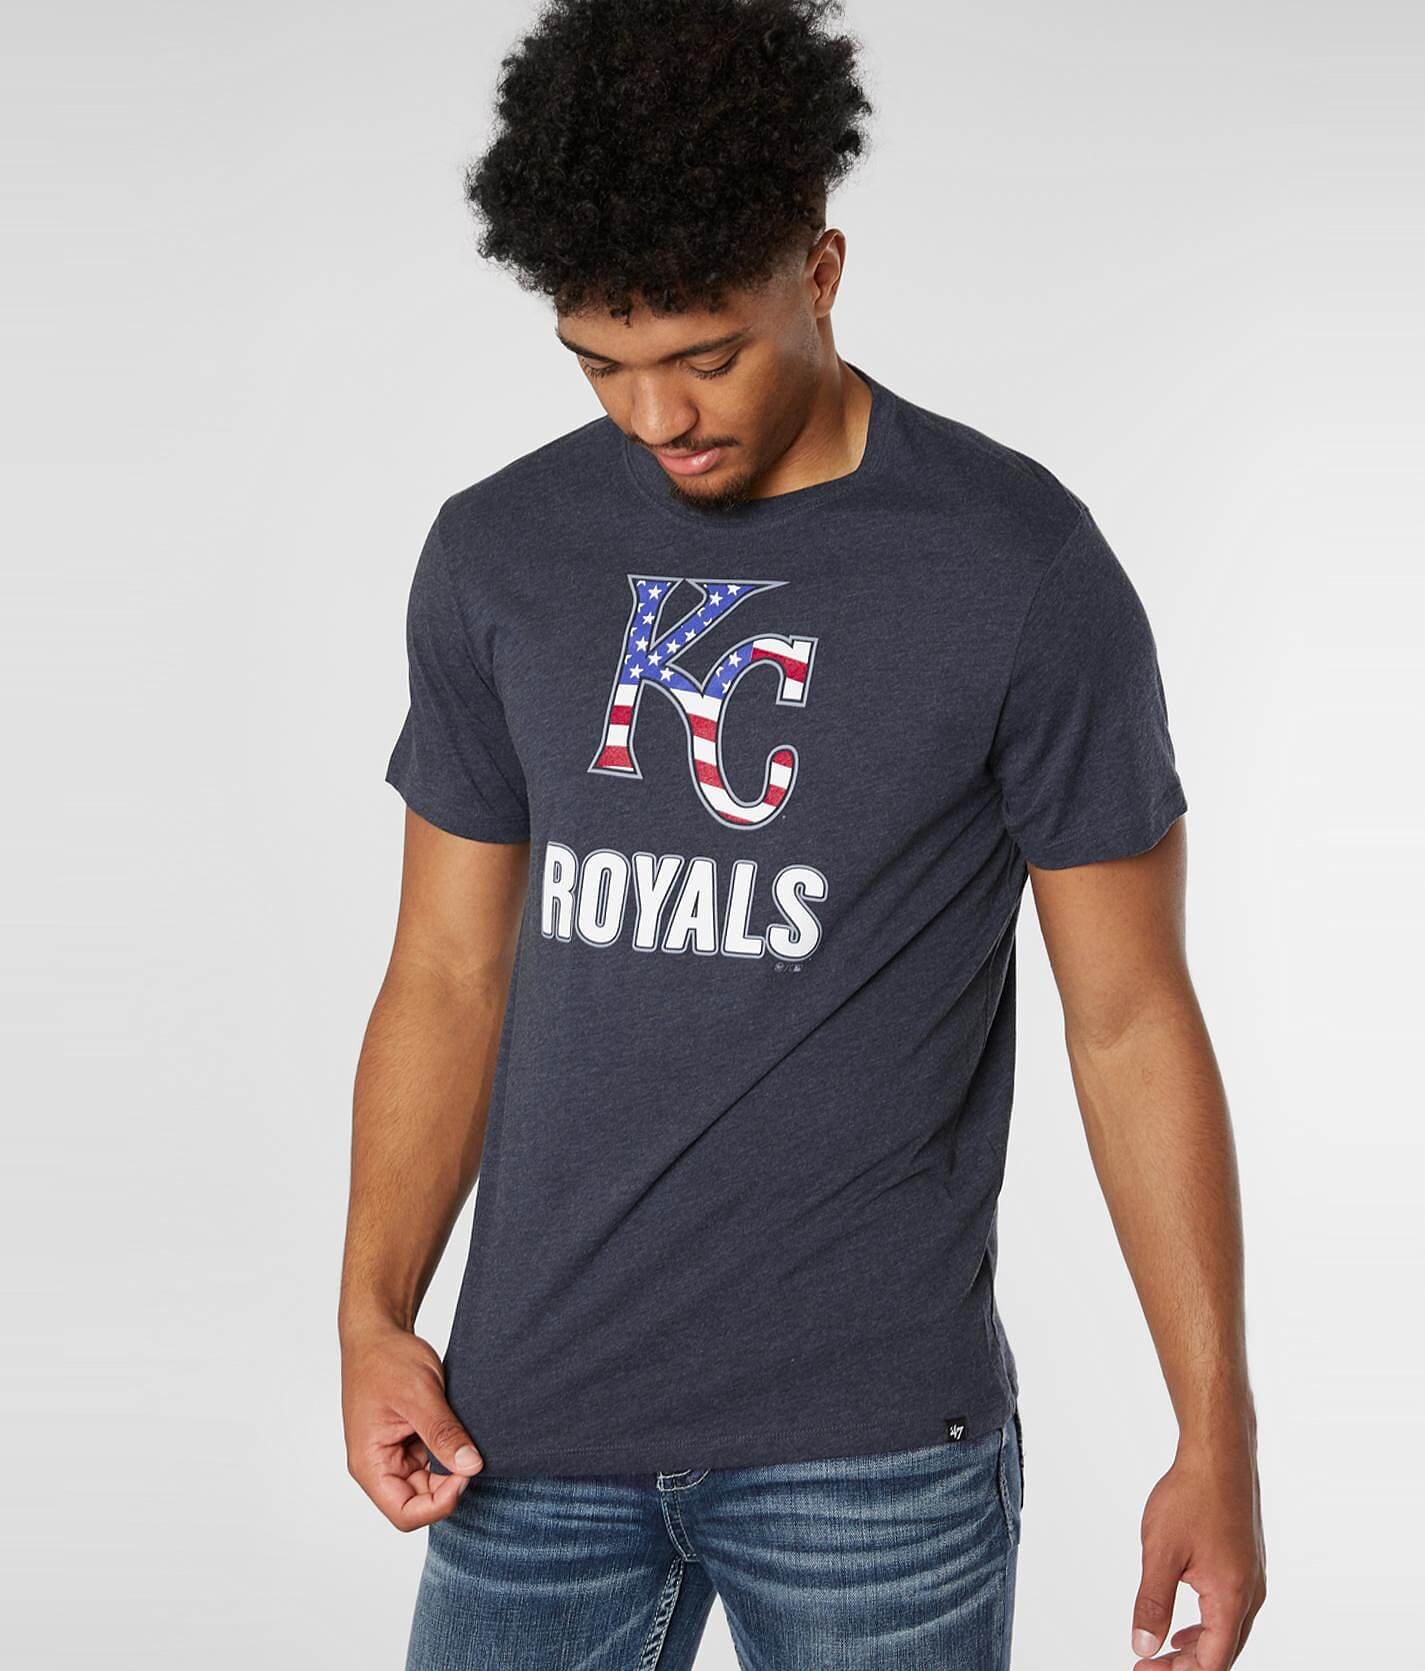 kc royals tee shirts